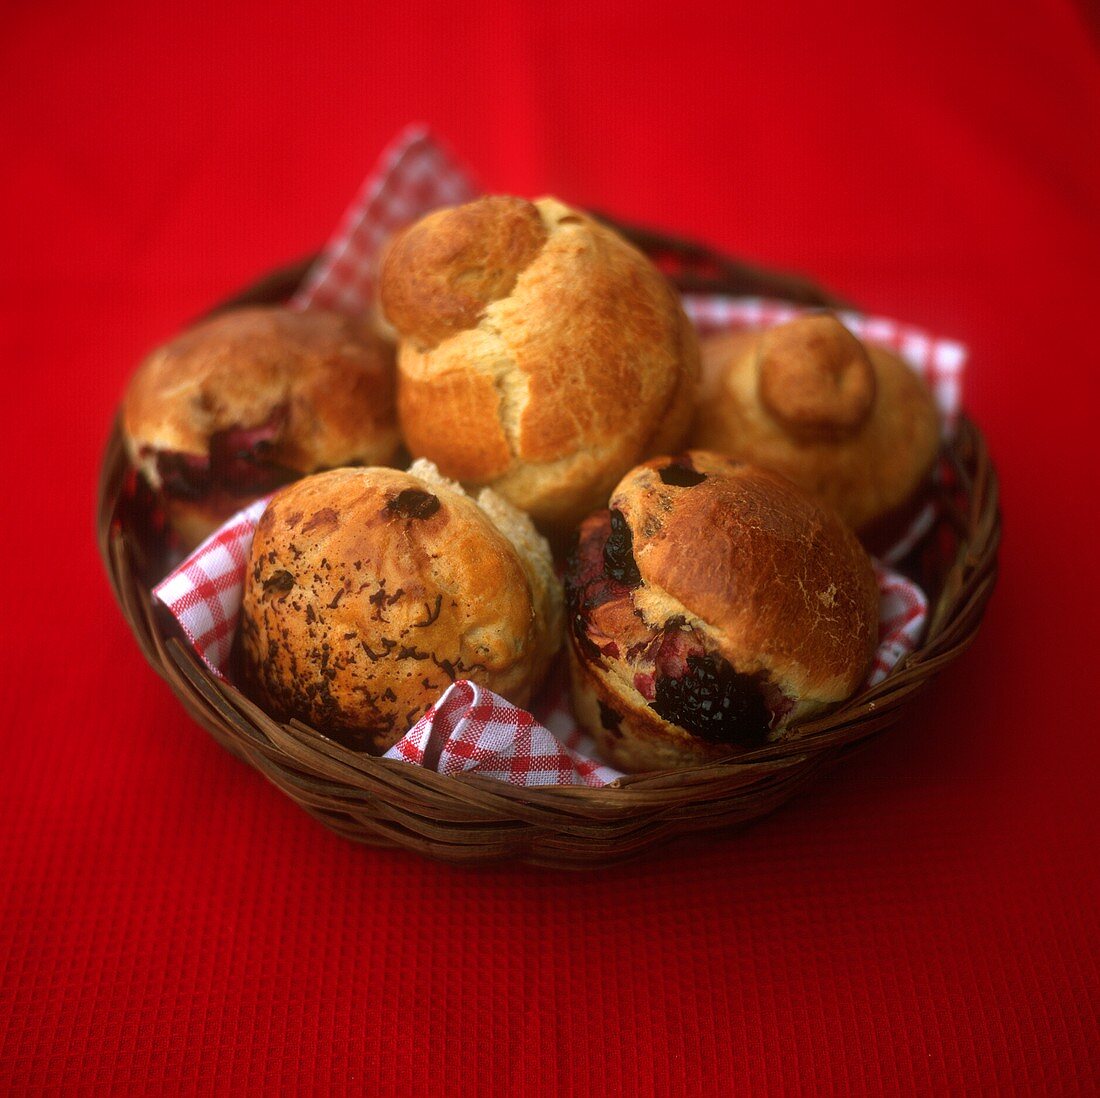 Blackberry muffin, raisin and brioches in bread basket